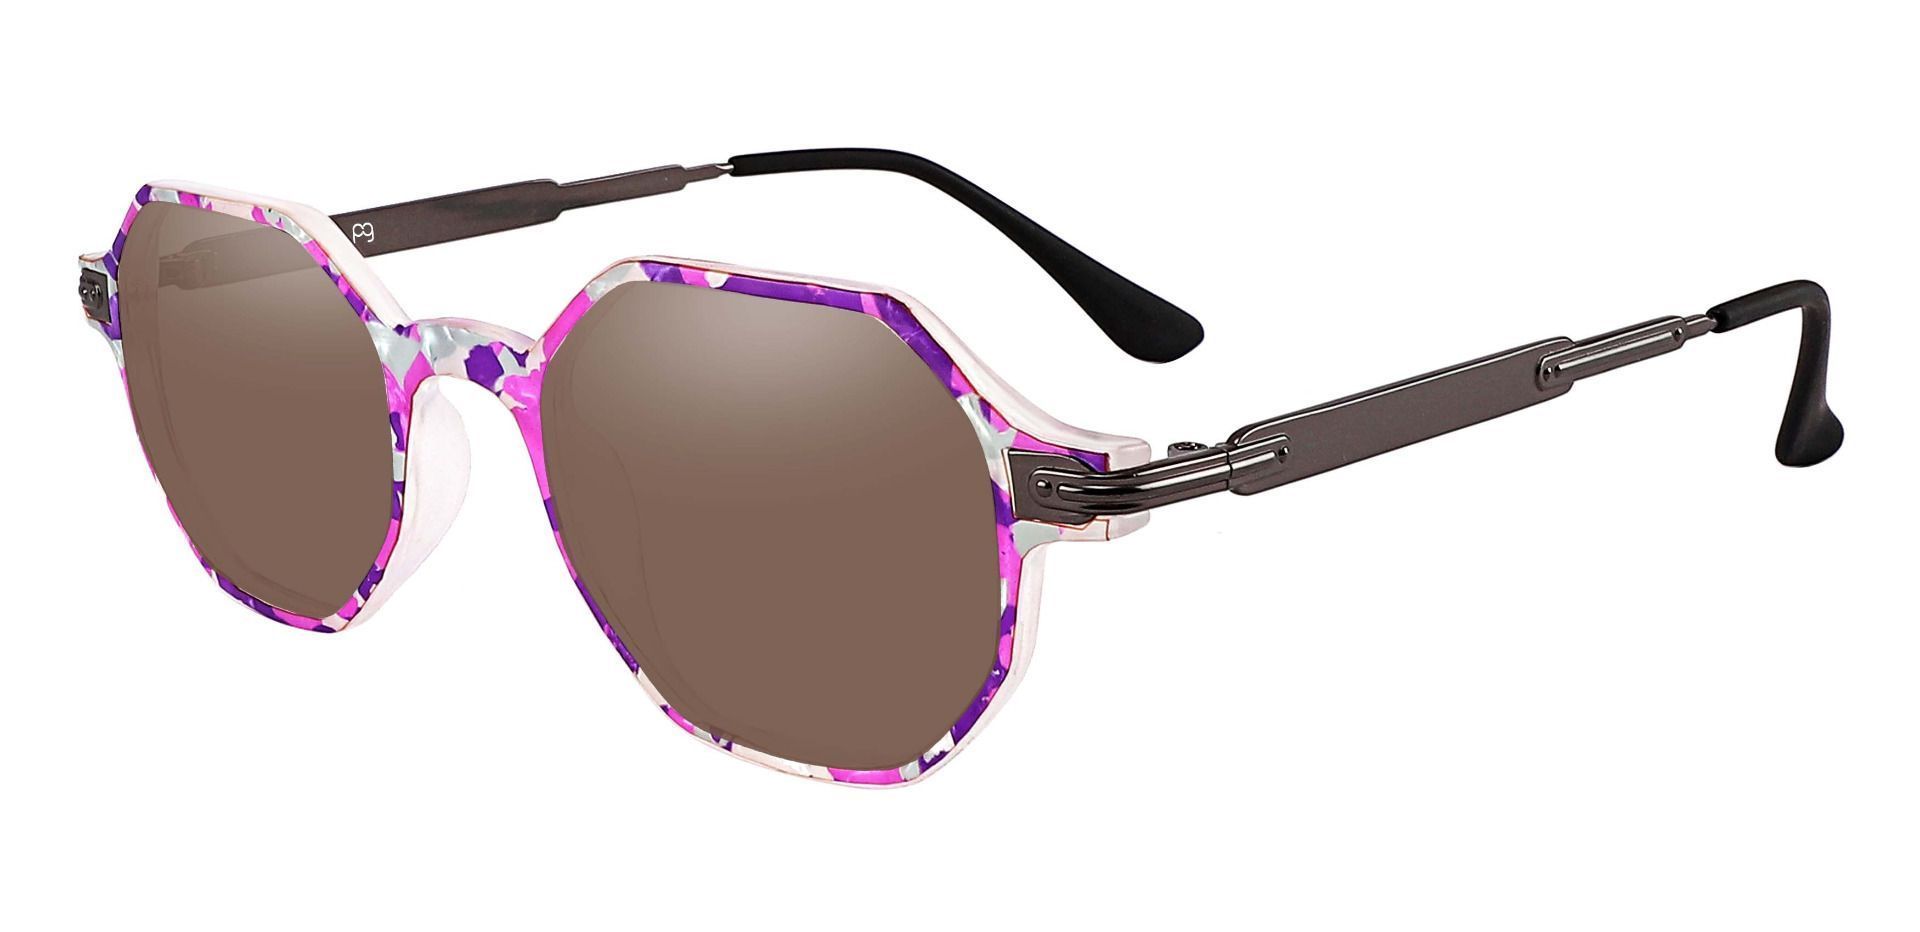 Bogart Geometric Progressive Sunglasses - Purple Frame With Brown Lenses